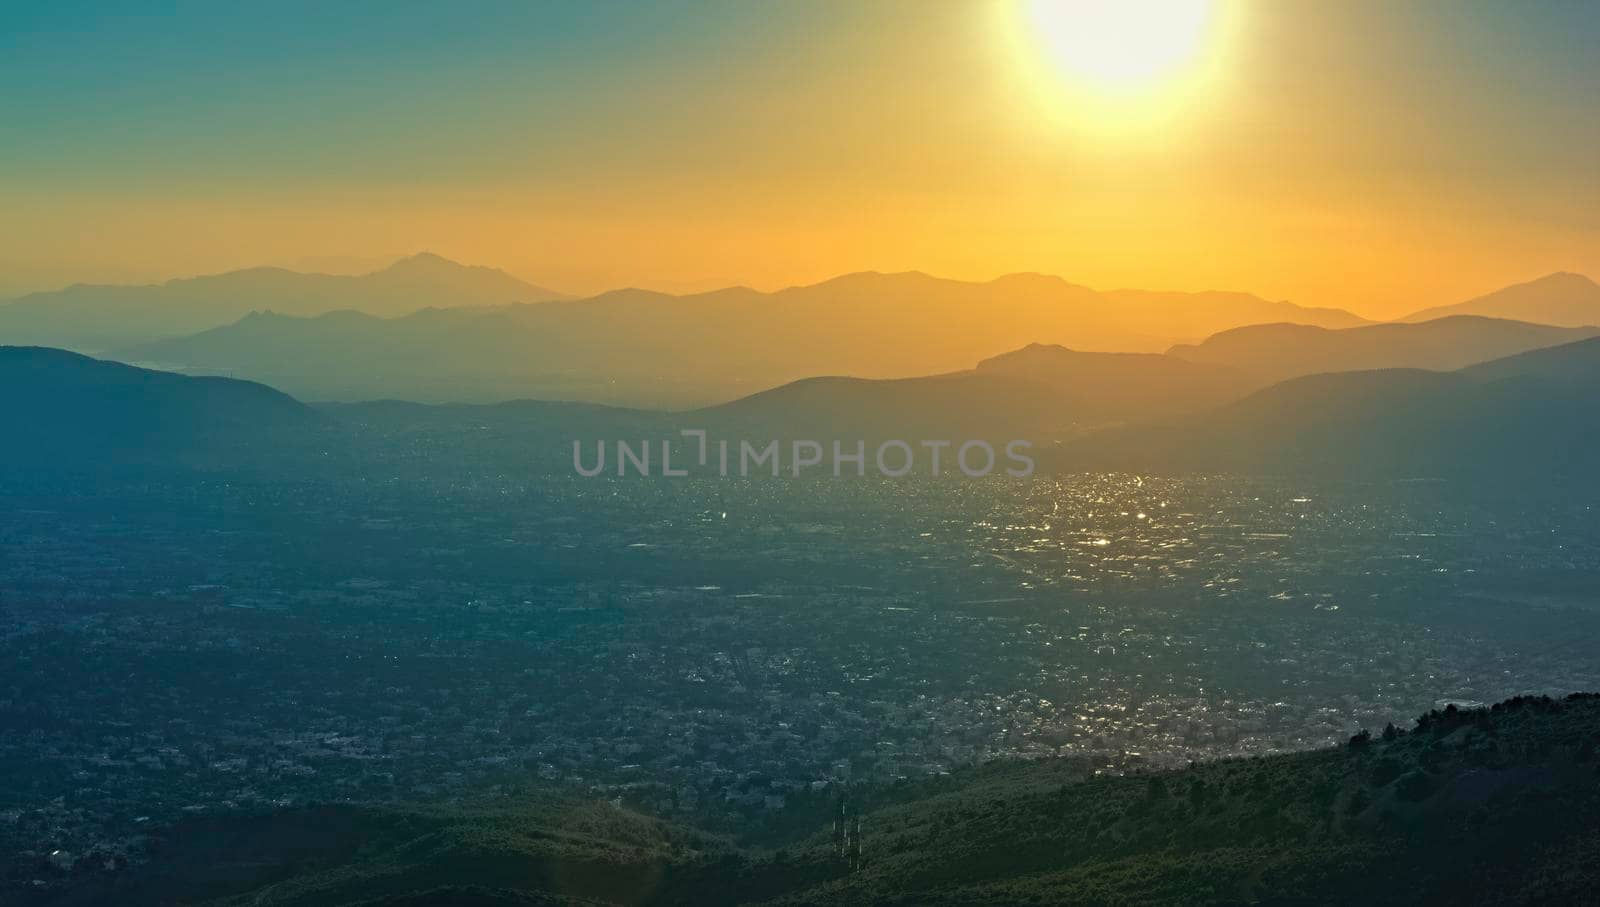 Panoramic view over Athens, taken shot from Penteli mountain at sunset.